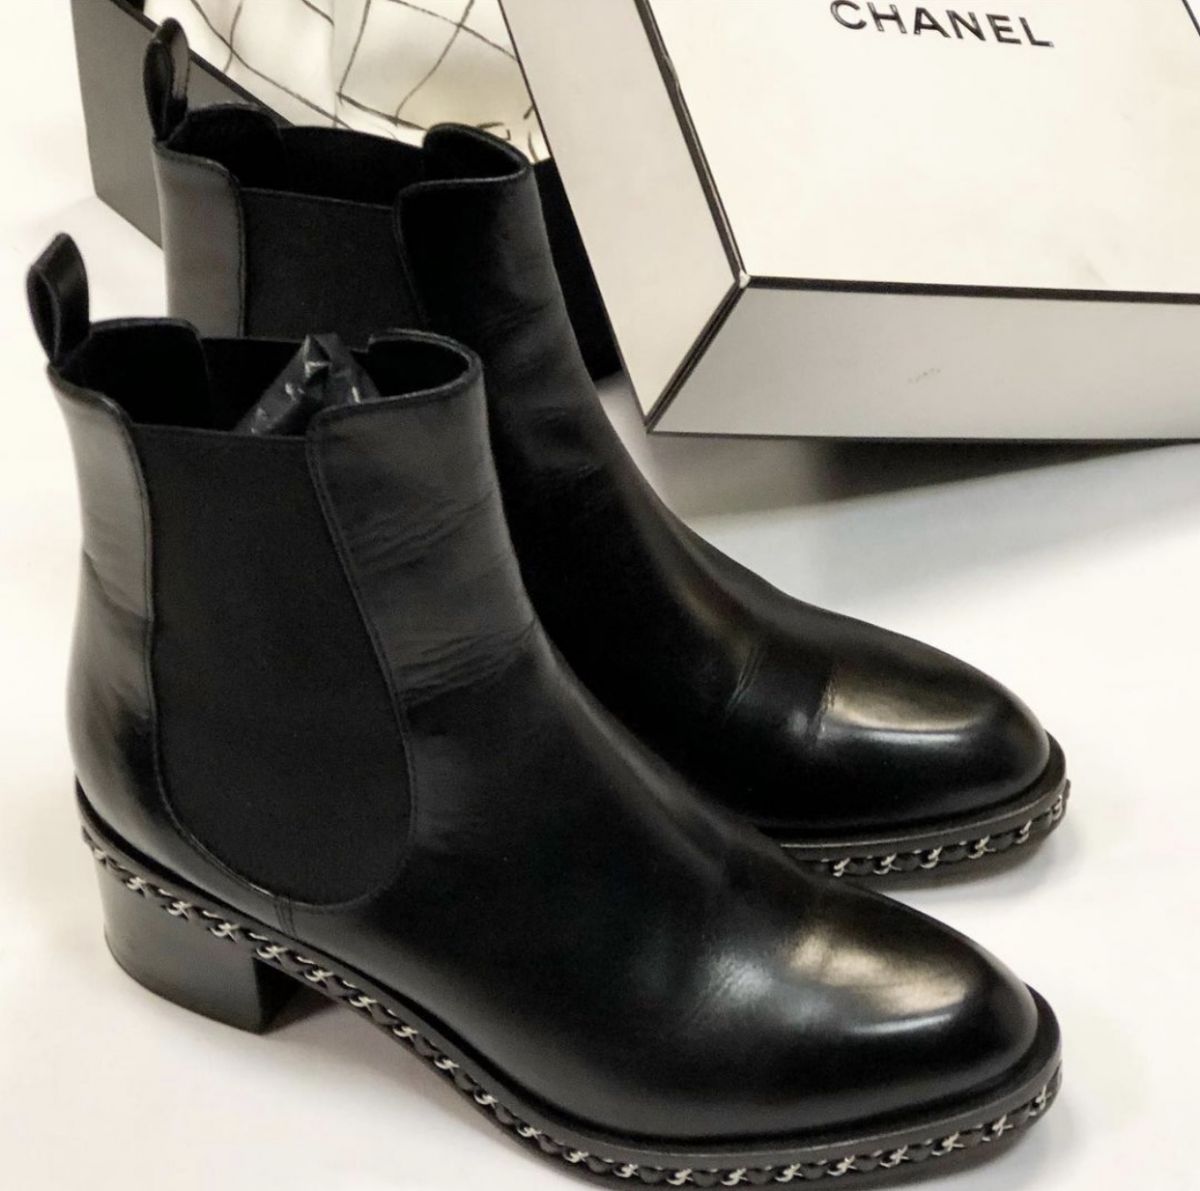 Ботинки Chanel  размер 41 цена 30 770 руб